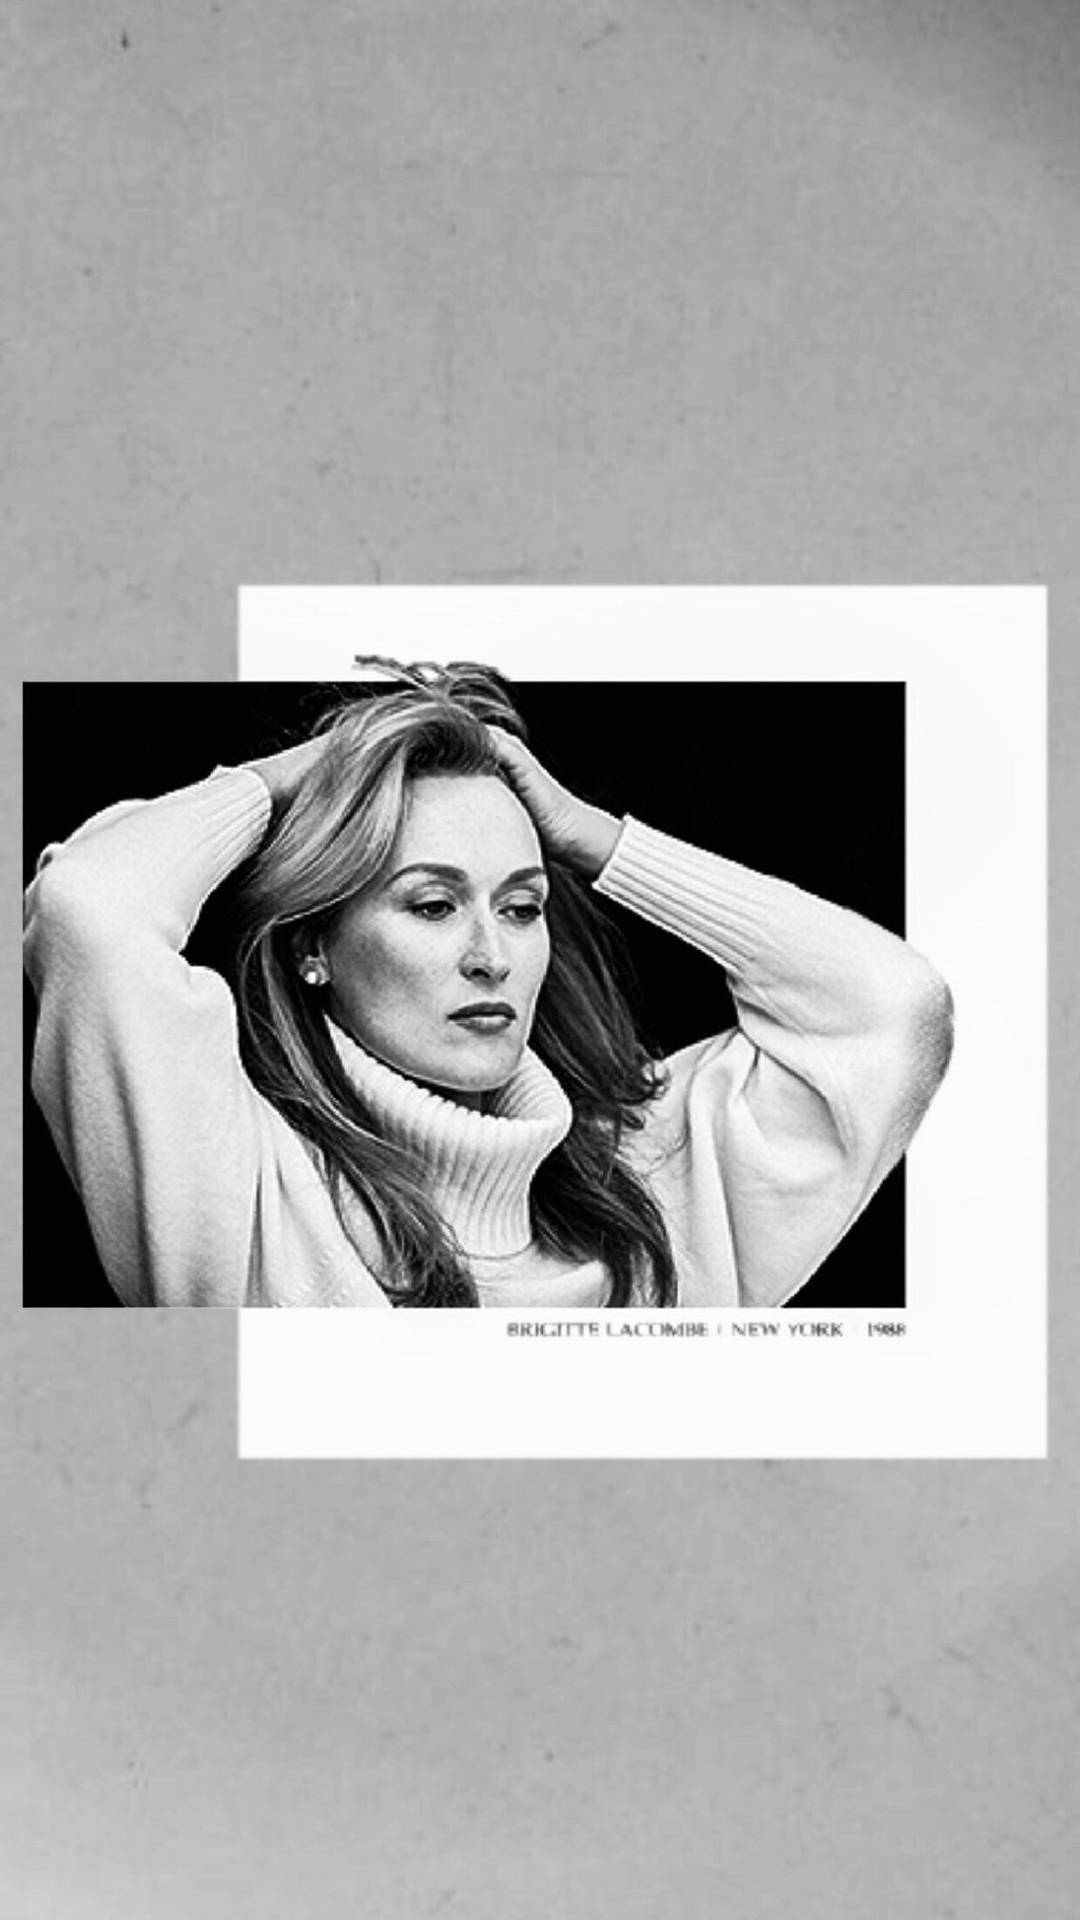 Aesthetic Image Of Meryl Streep